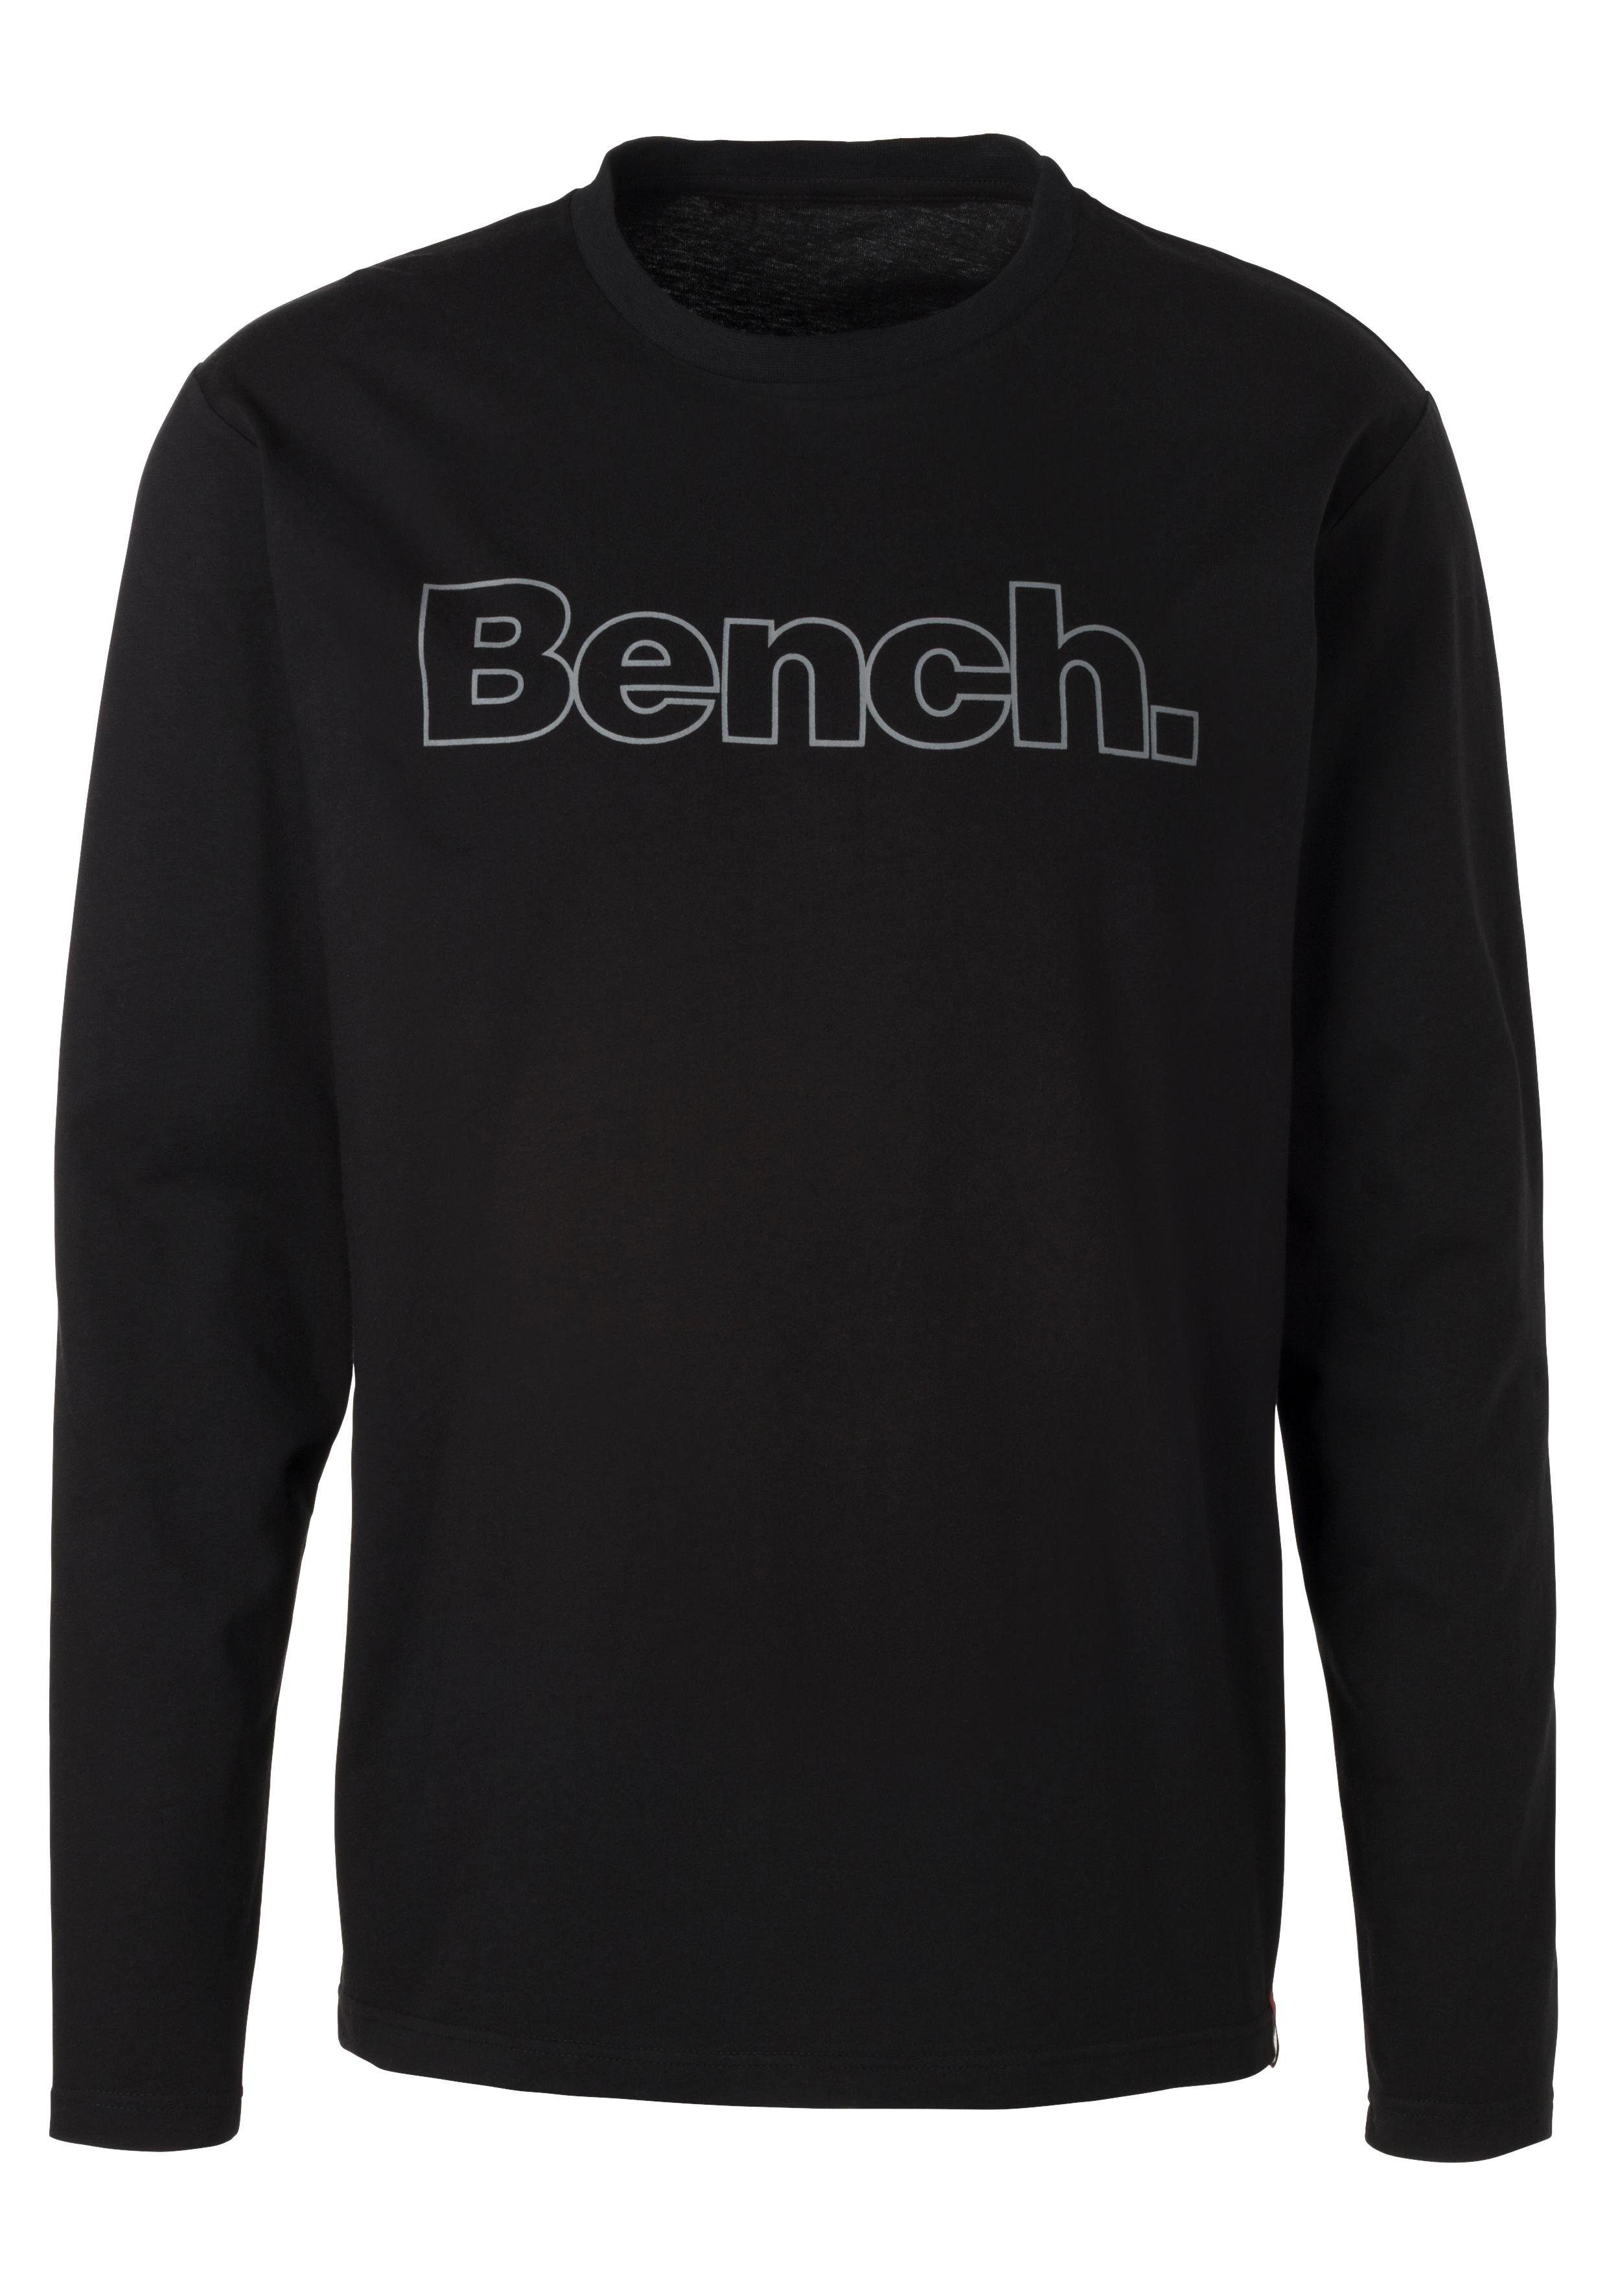 Bench. Loungewear Langarmshirt Print schwarz Bench. petrol, (2-tlg) mit vorn